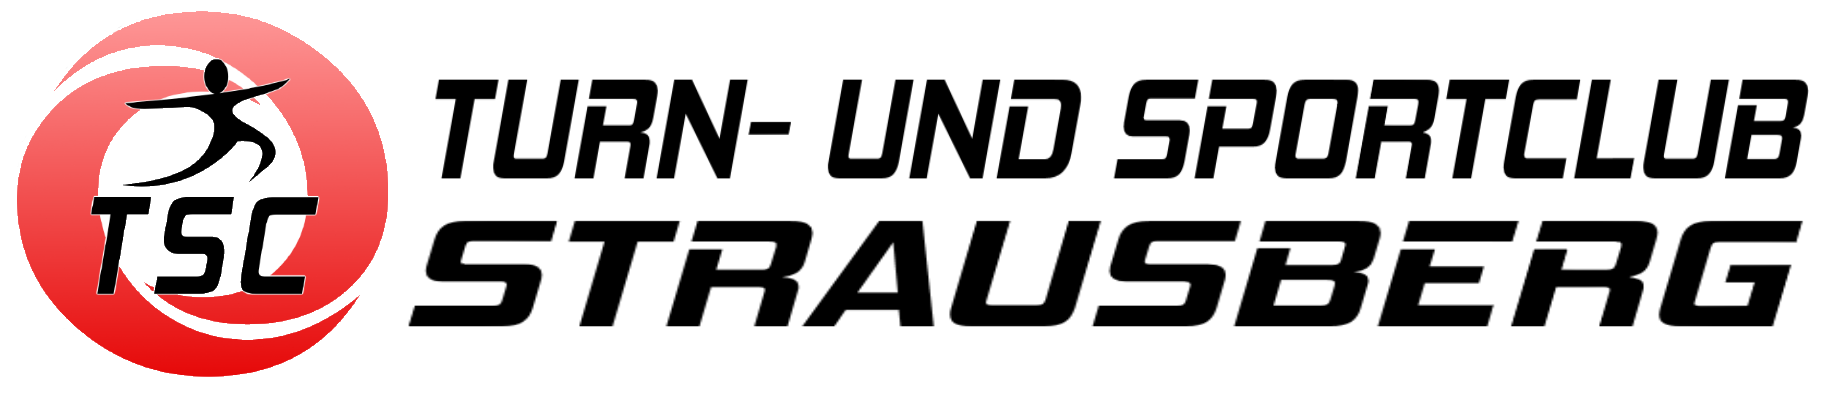 Turn- und Sportclub Strausberg logo